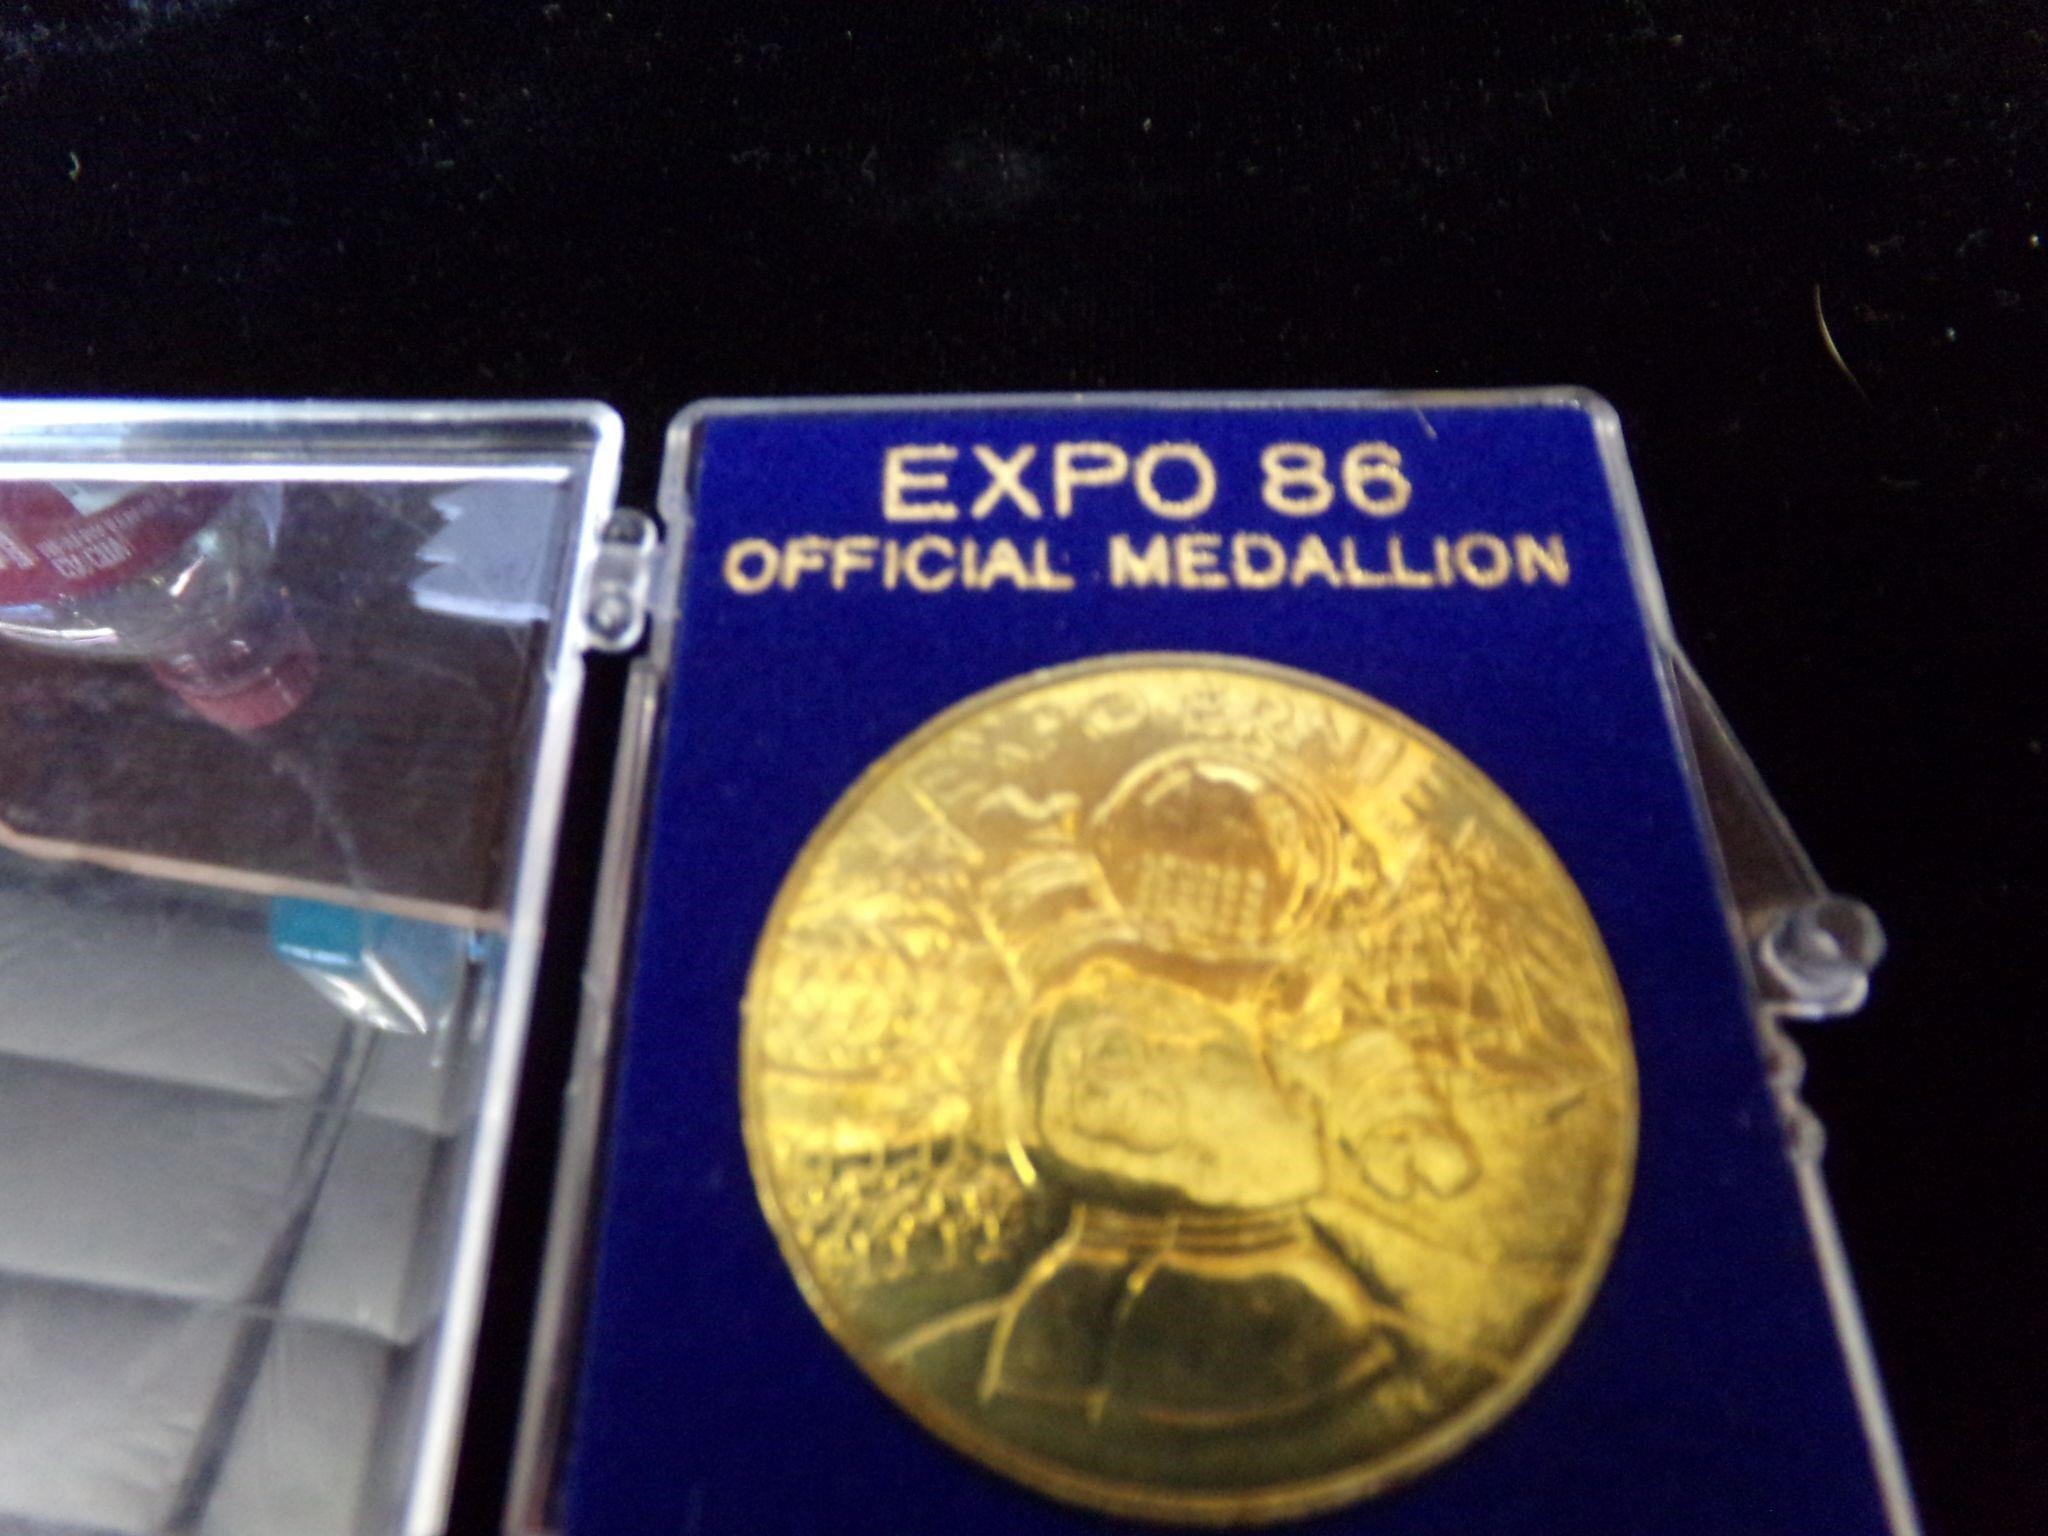 Expo 86 Medallion